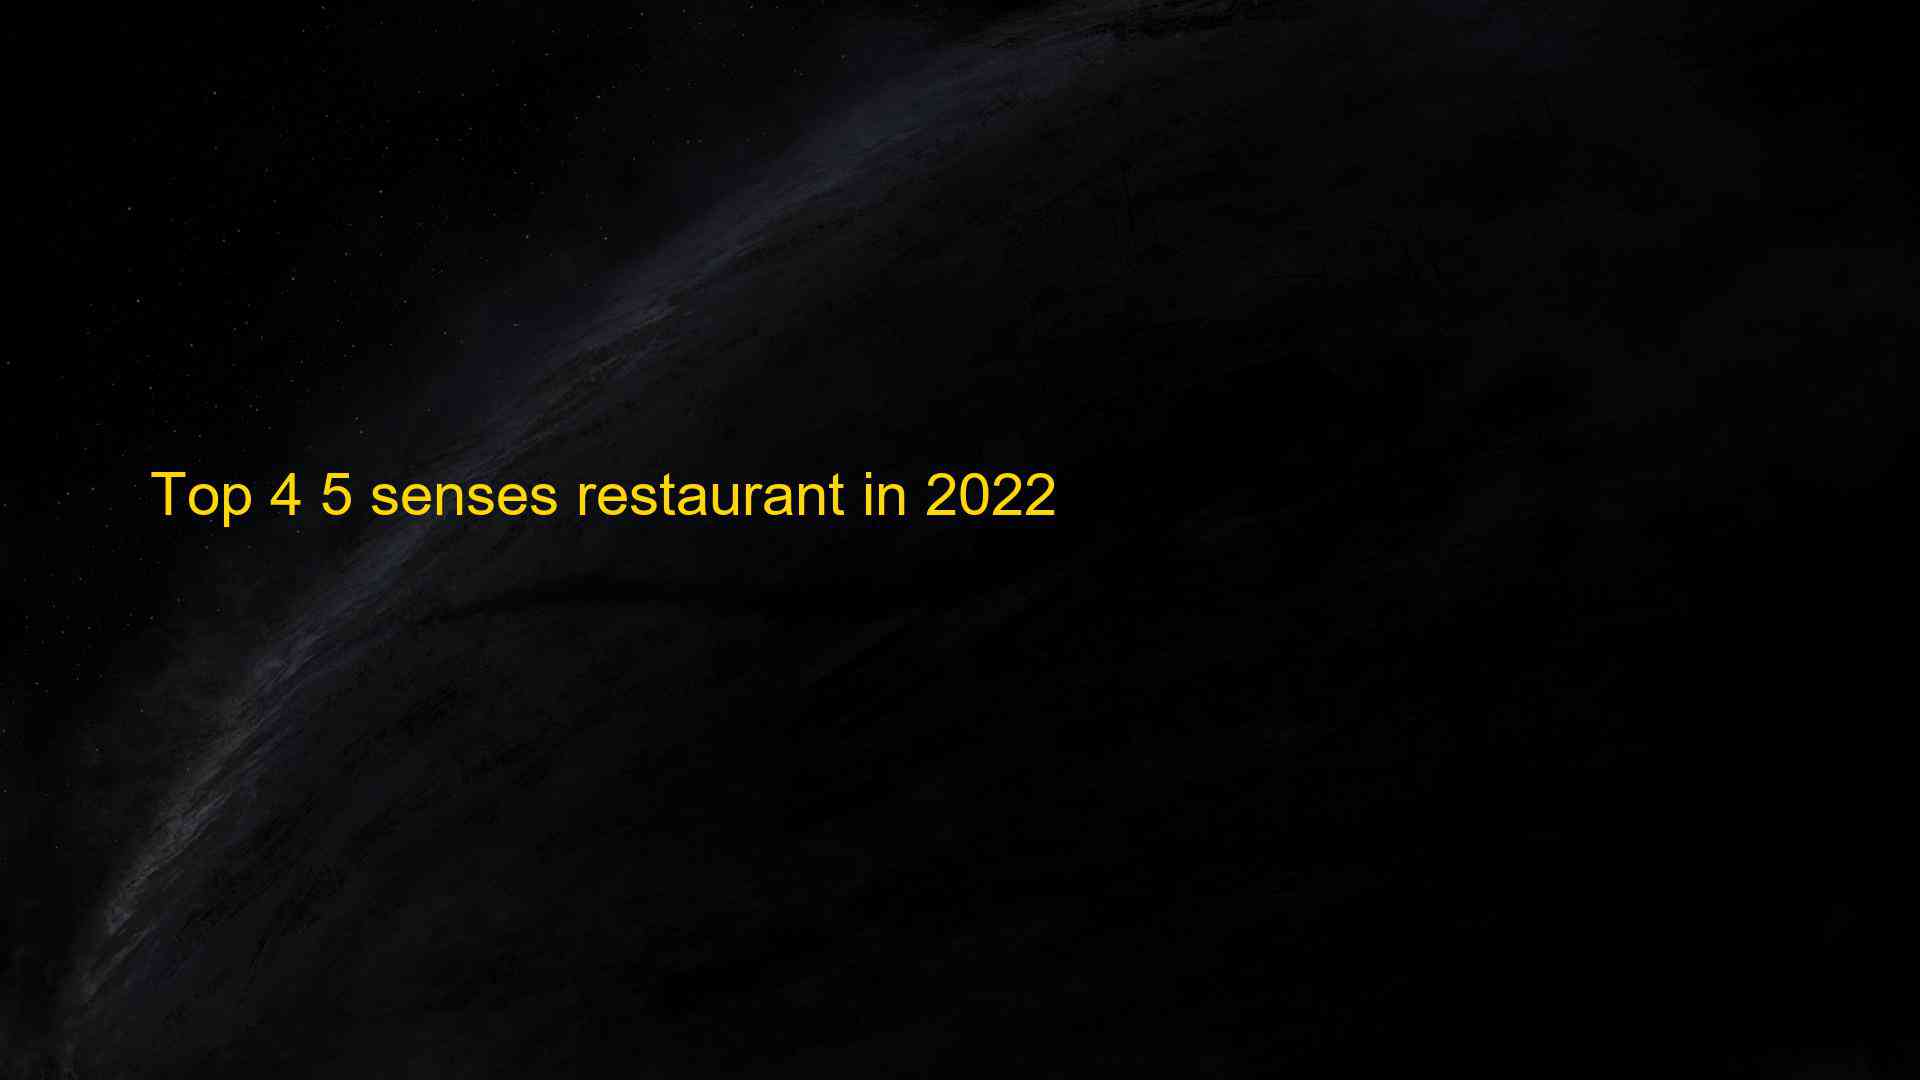 Top 4 5 senses restaurant in 2022 1663409673